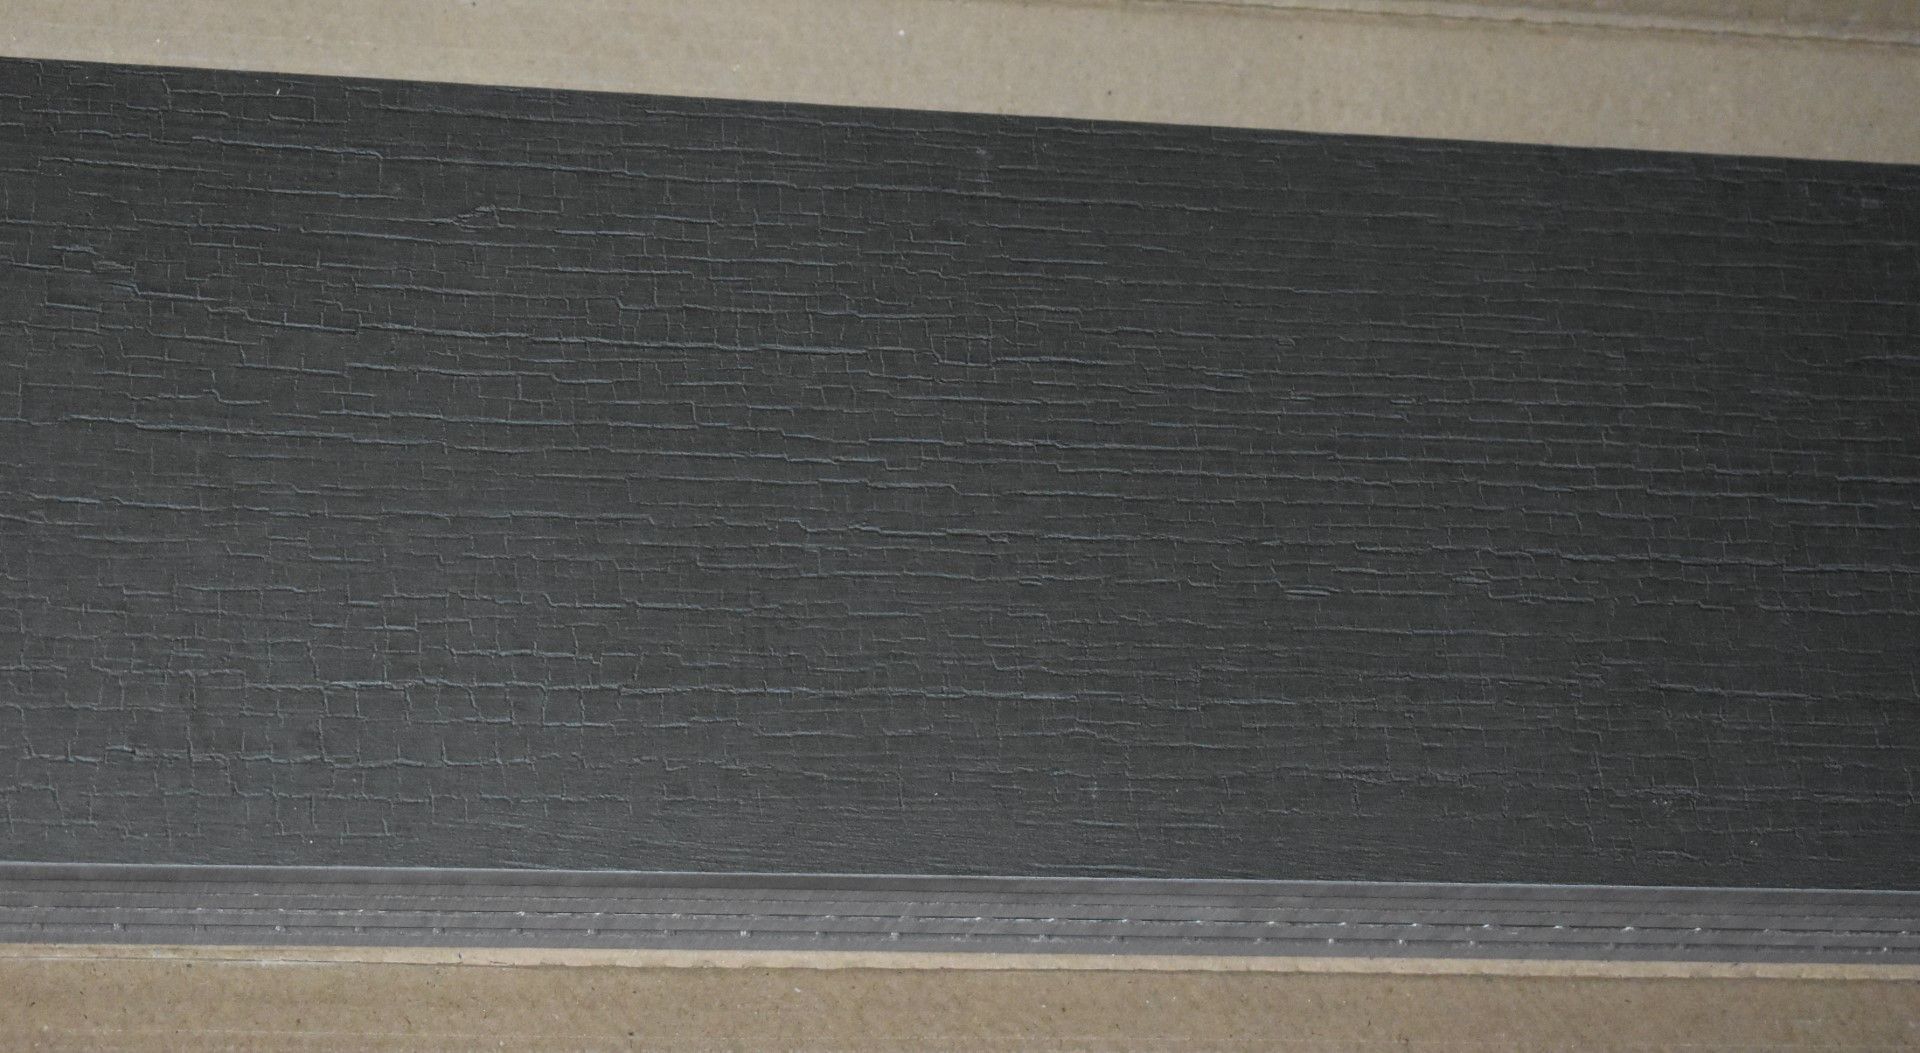 12 x Boxes of RAK Porcelain Floor or Wall Tiles - M Project Wood Design in Dark Grey - 19.5 x 120 cm - Image 6 of 11